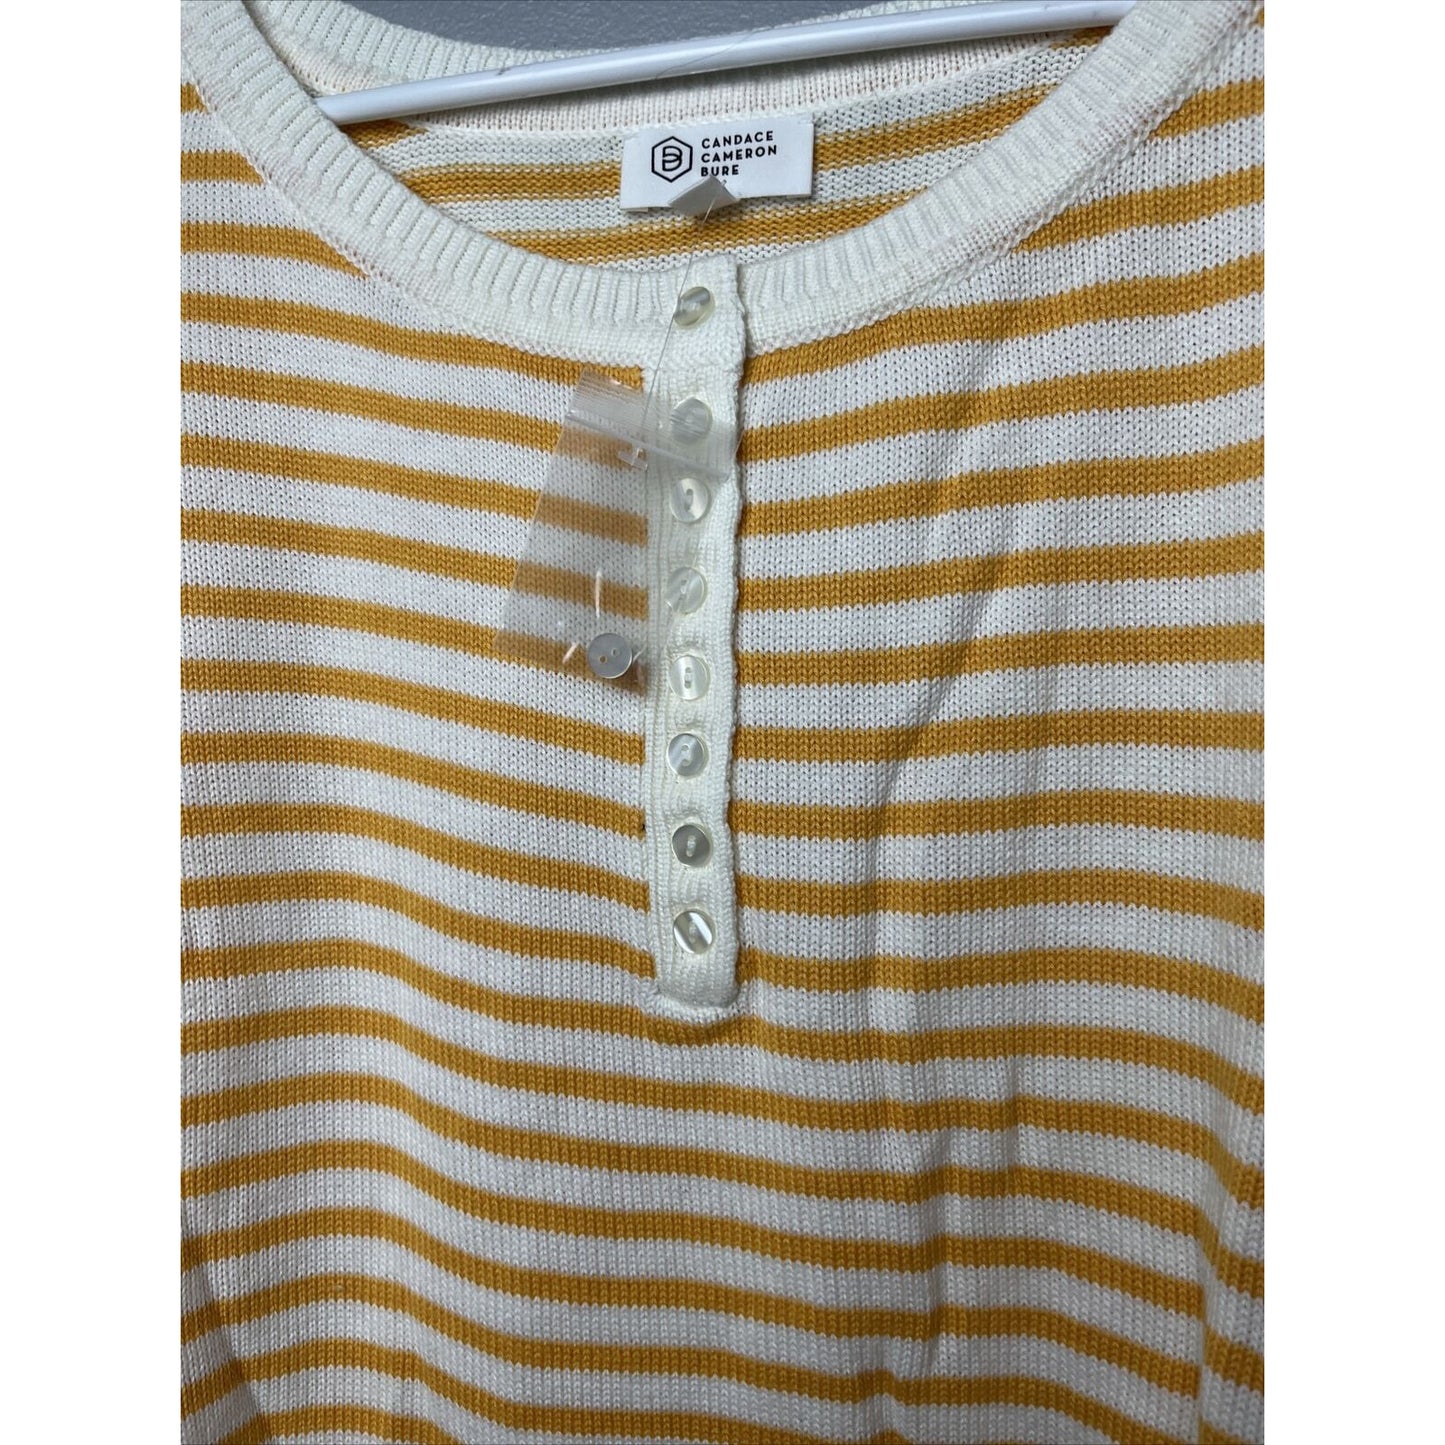 Candace Cameron Bure Soft Boatneck Half Placket Sweater- Amber Stripe, 4X